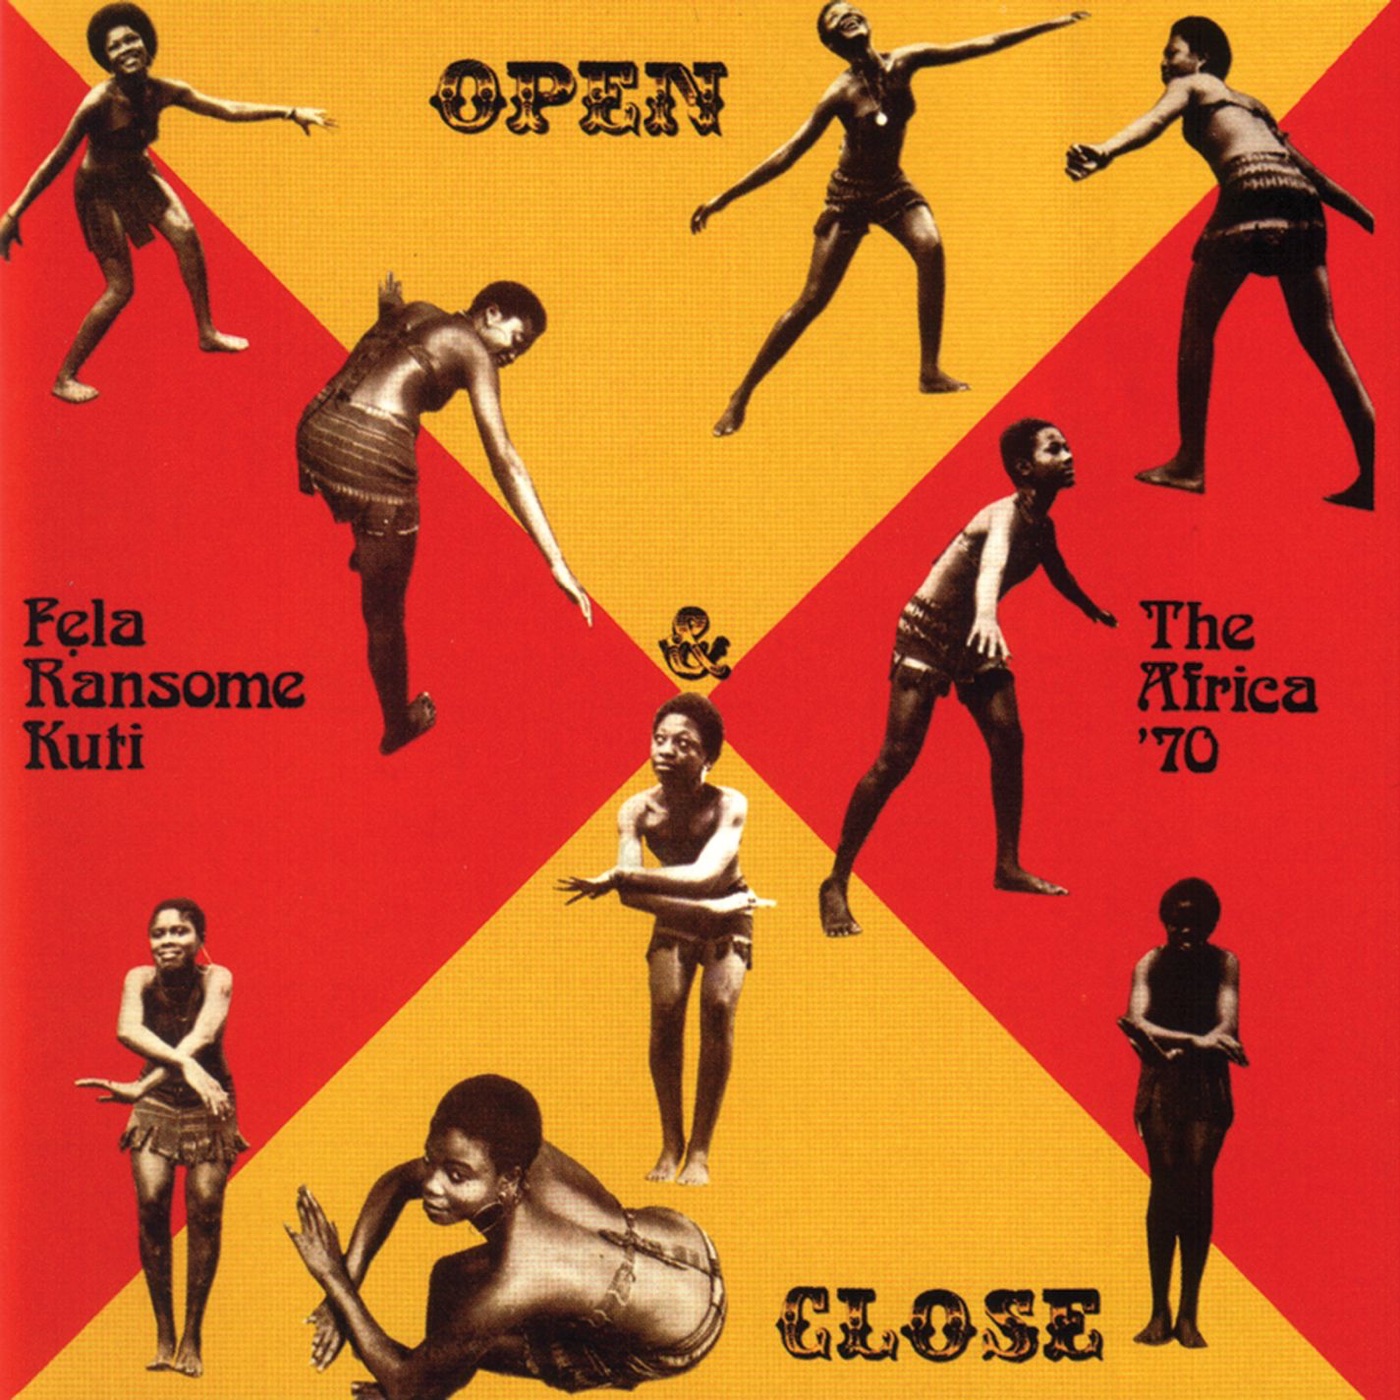 Open & Close by Fela Kuti, Afrika 70